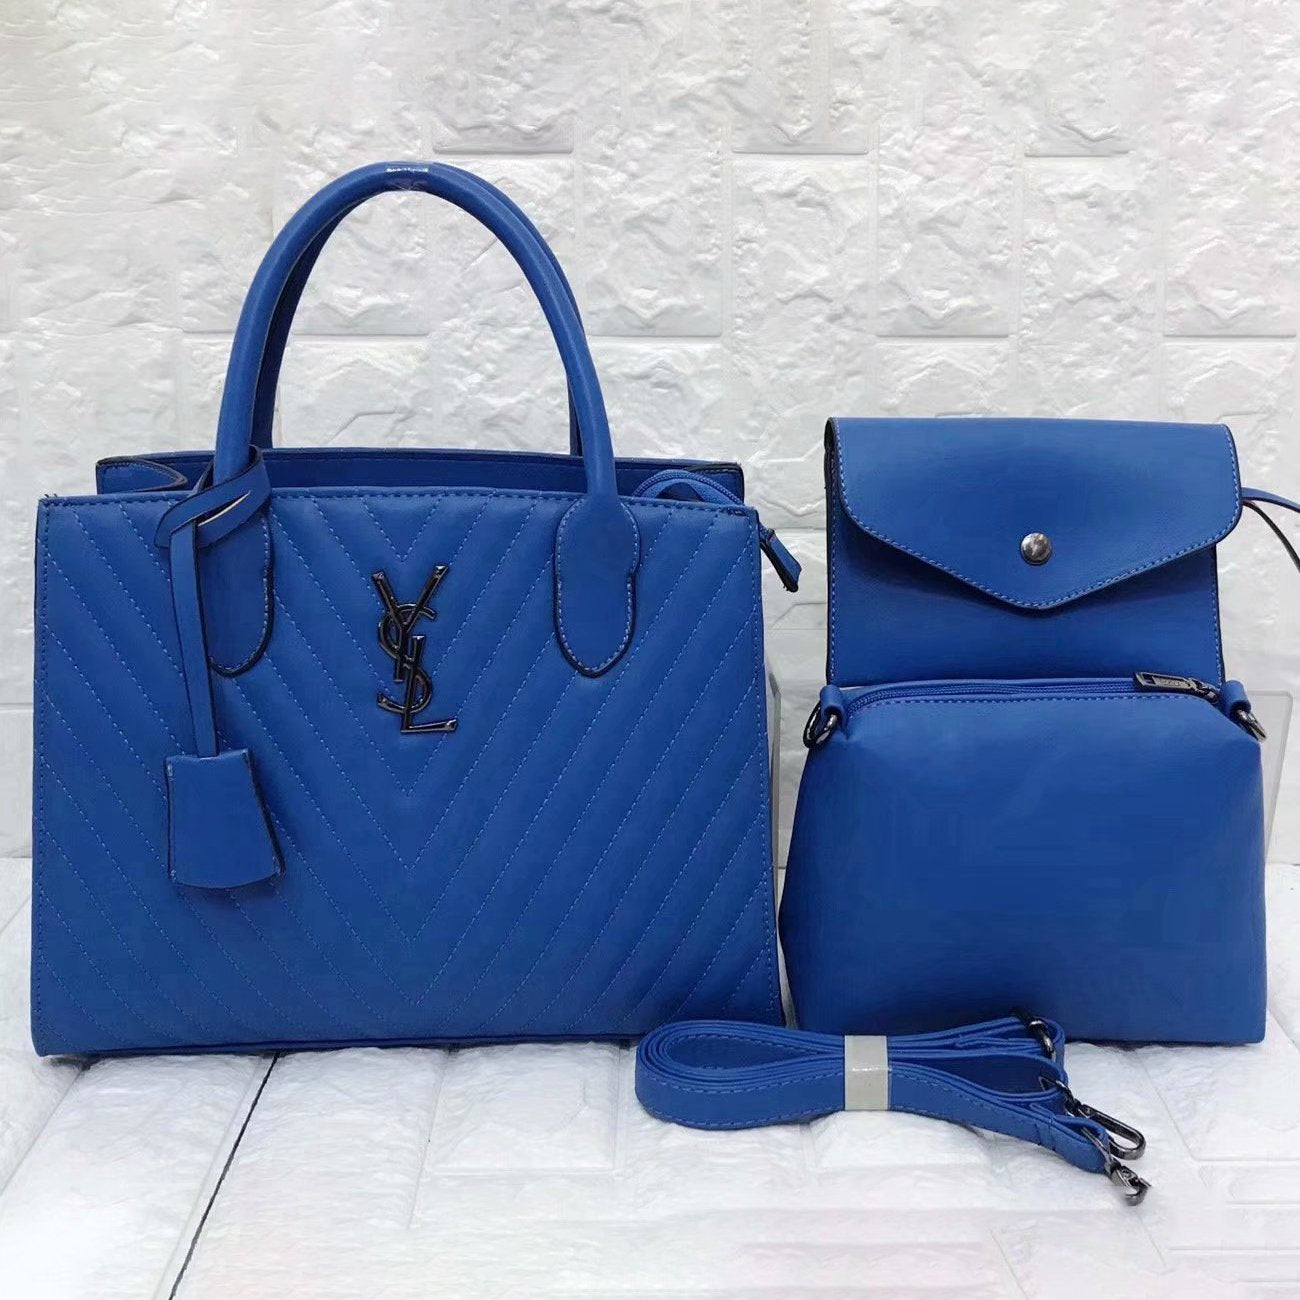 YSL Saint Laurent Fashion Leather Handbag Satchel Tote Two Piece